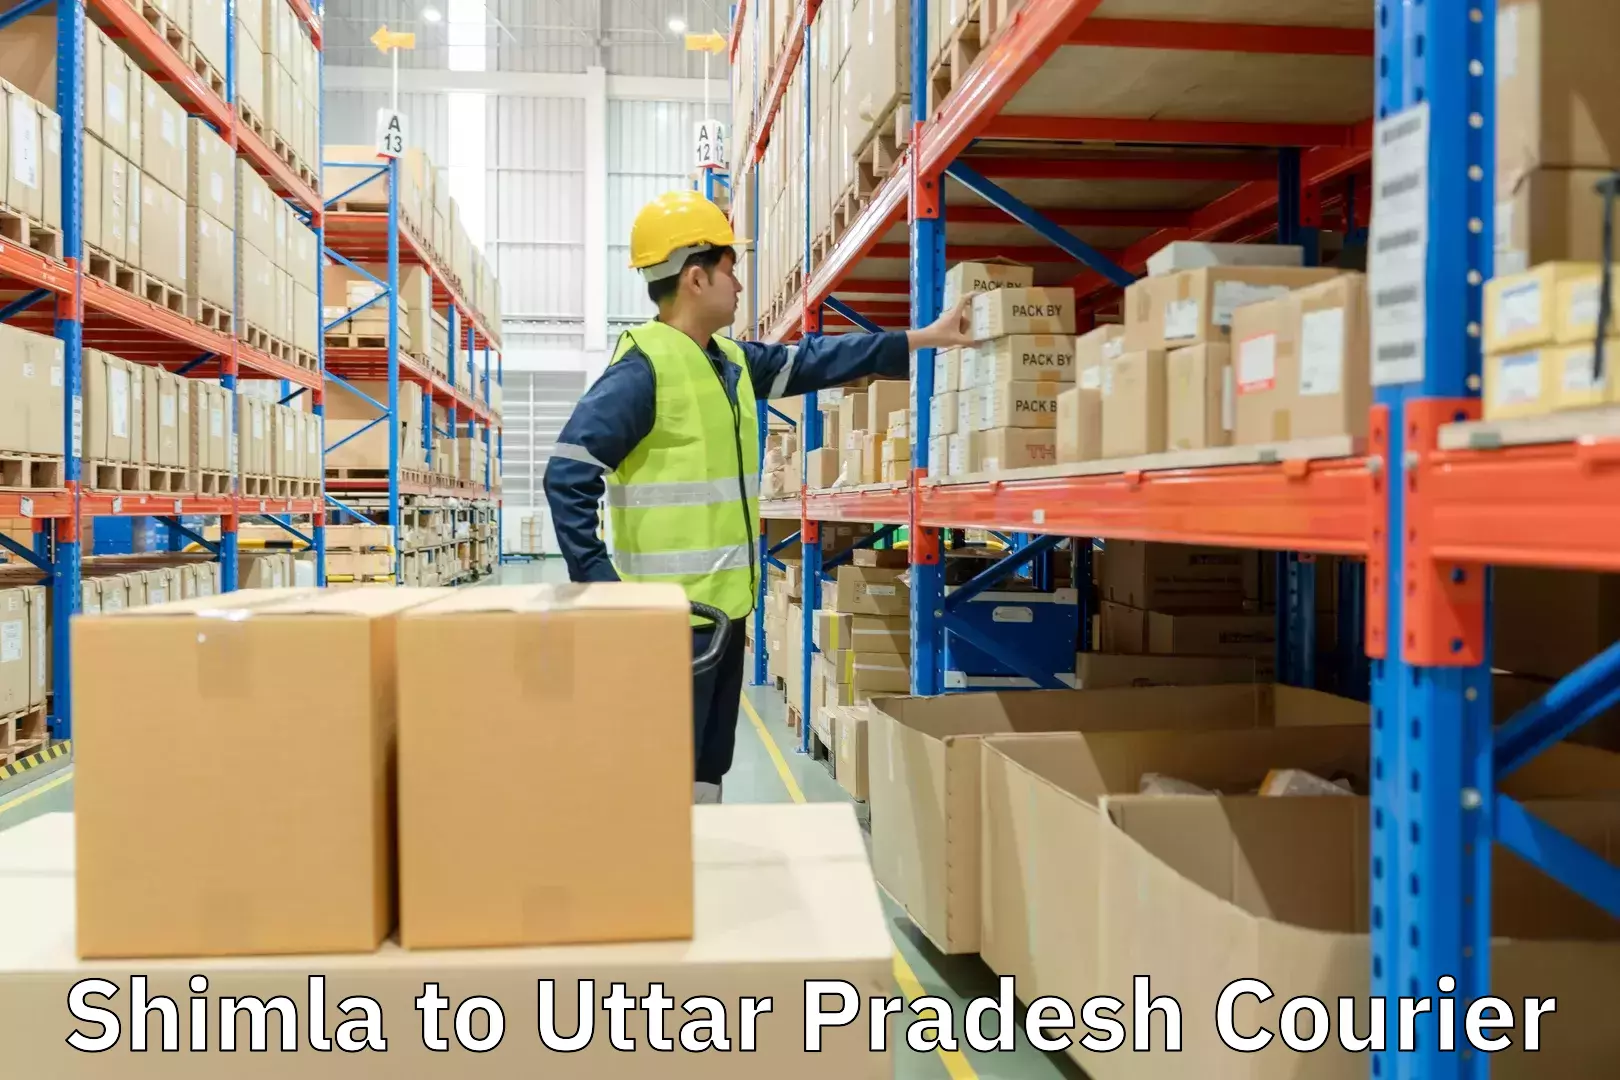 Global logistics network Shimla to Uttar Pradesh